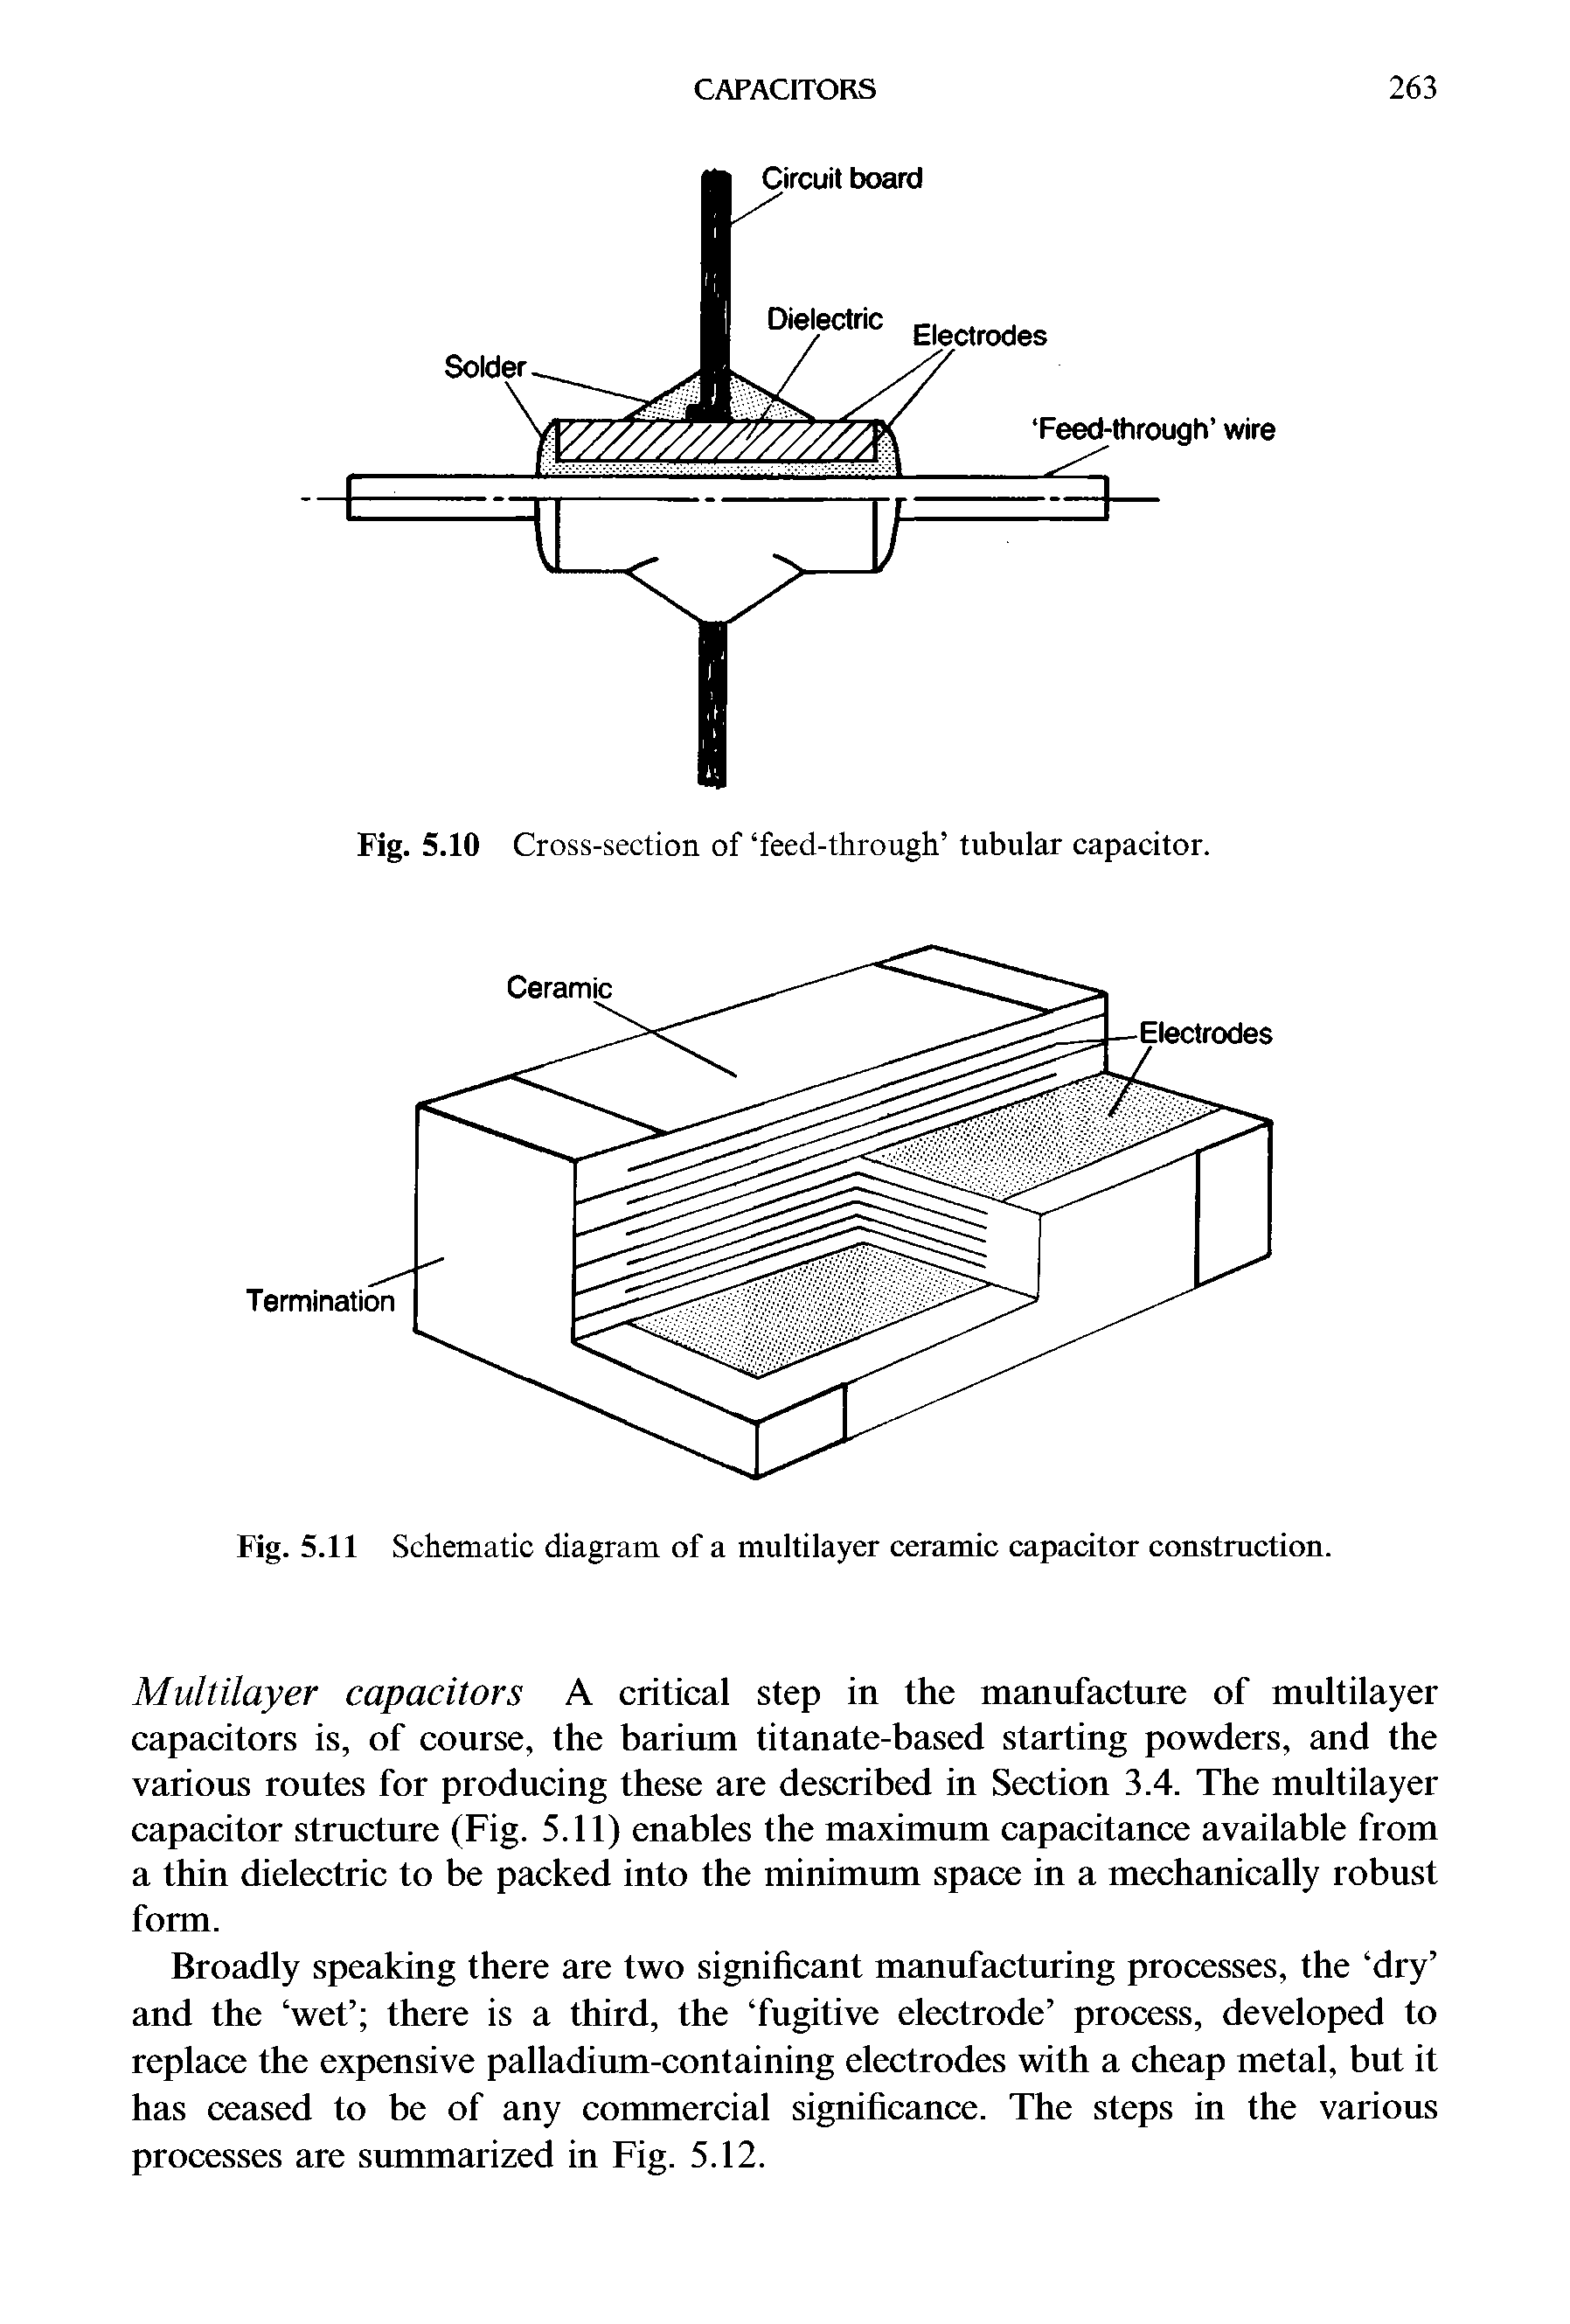 Fig. 5.11 Schematic diagram of a multilayer ceramic capacitor construction.